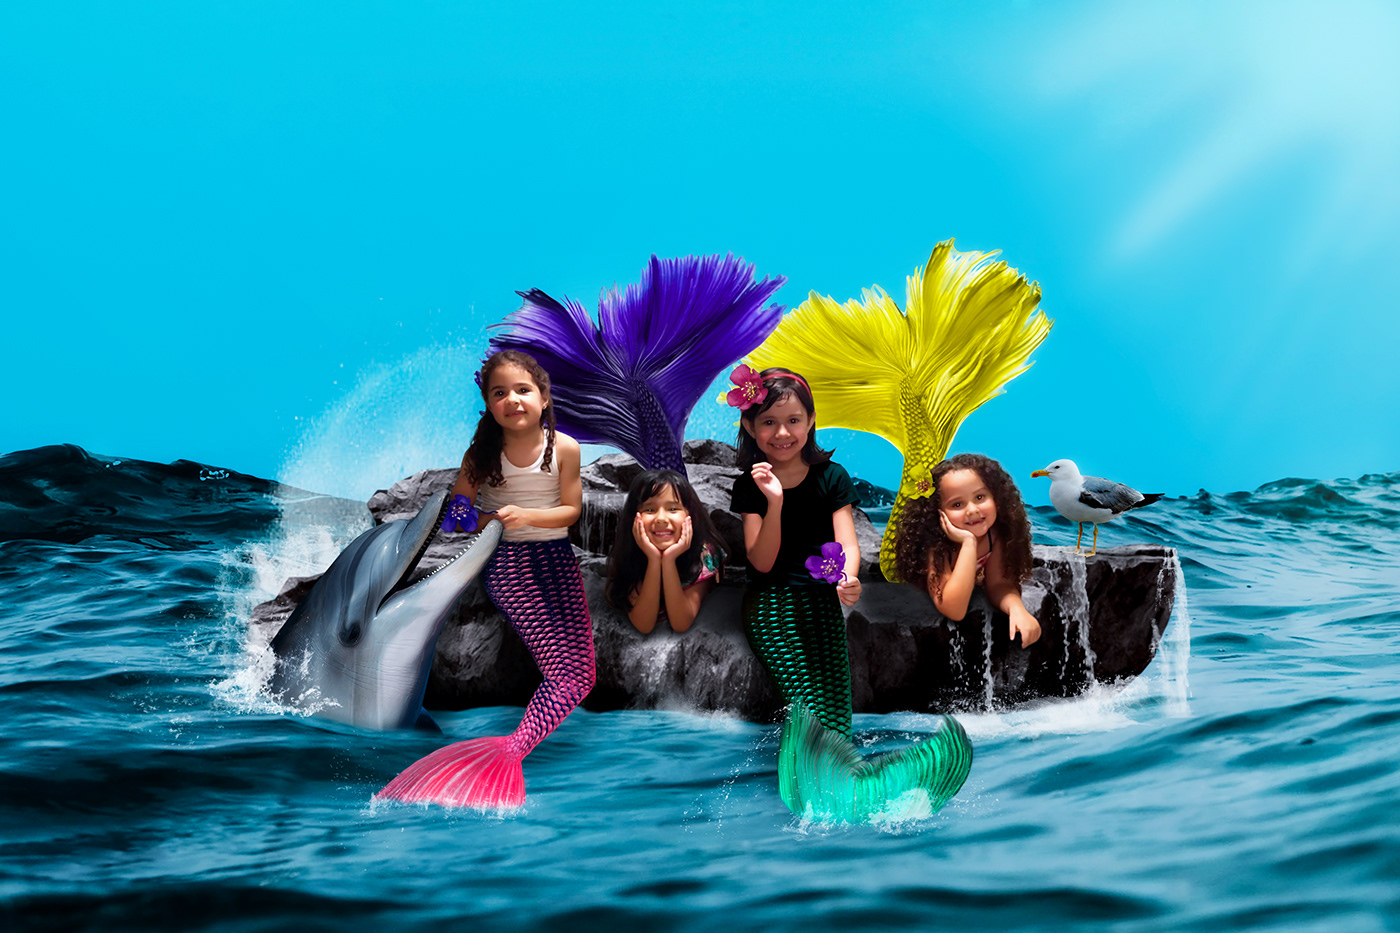 The little mermaids